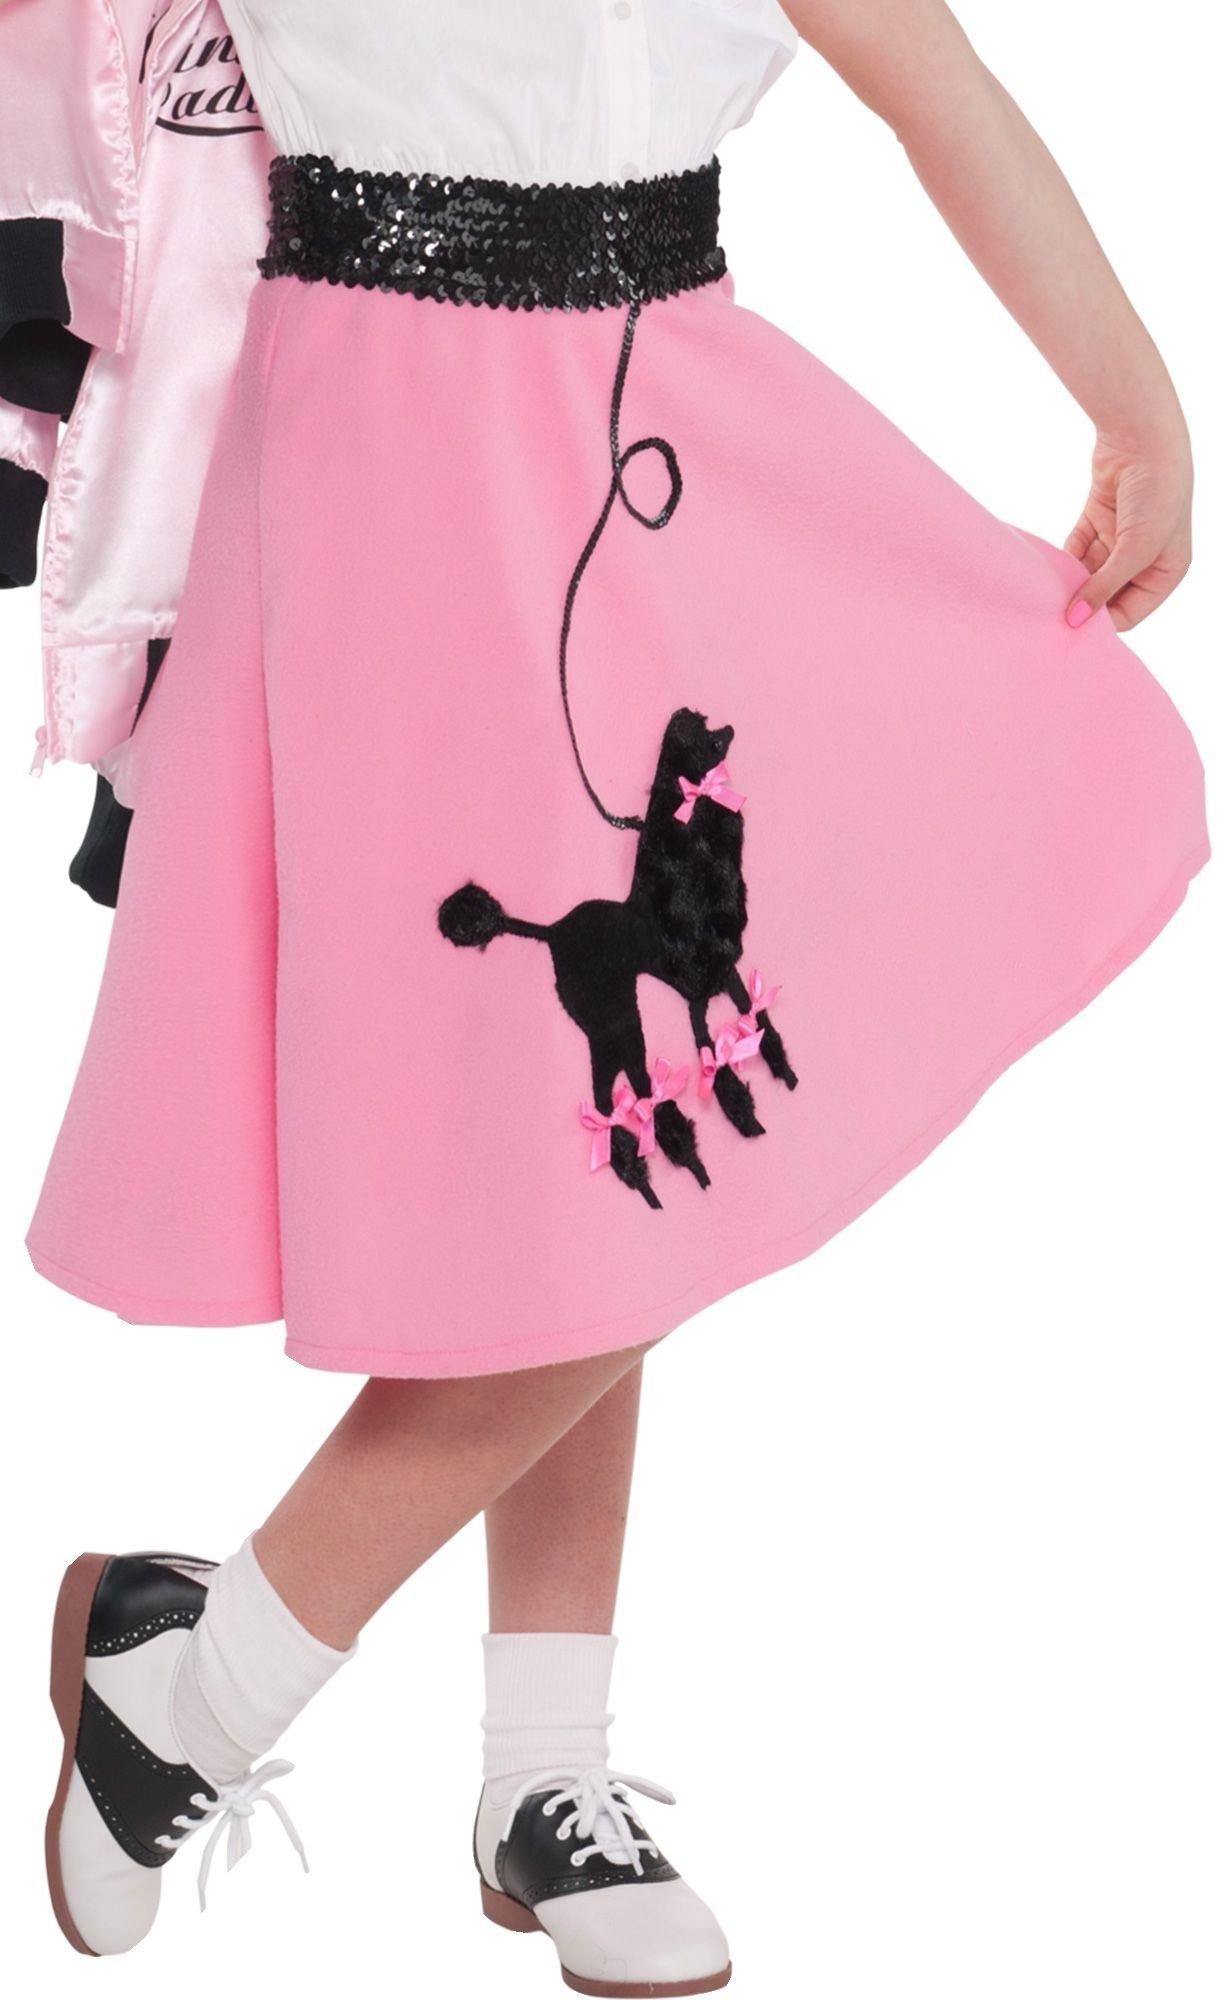 Girls Pink Poodle Skirt